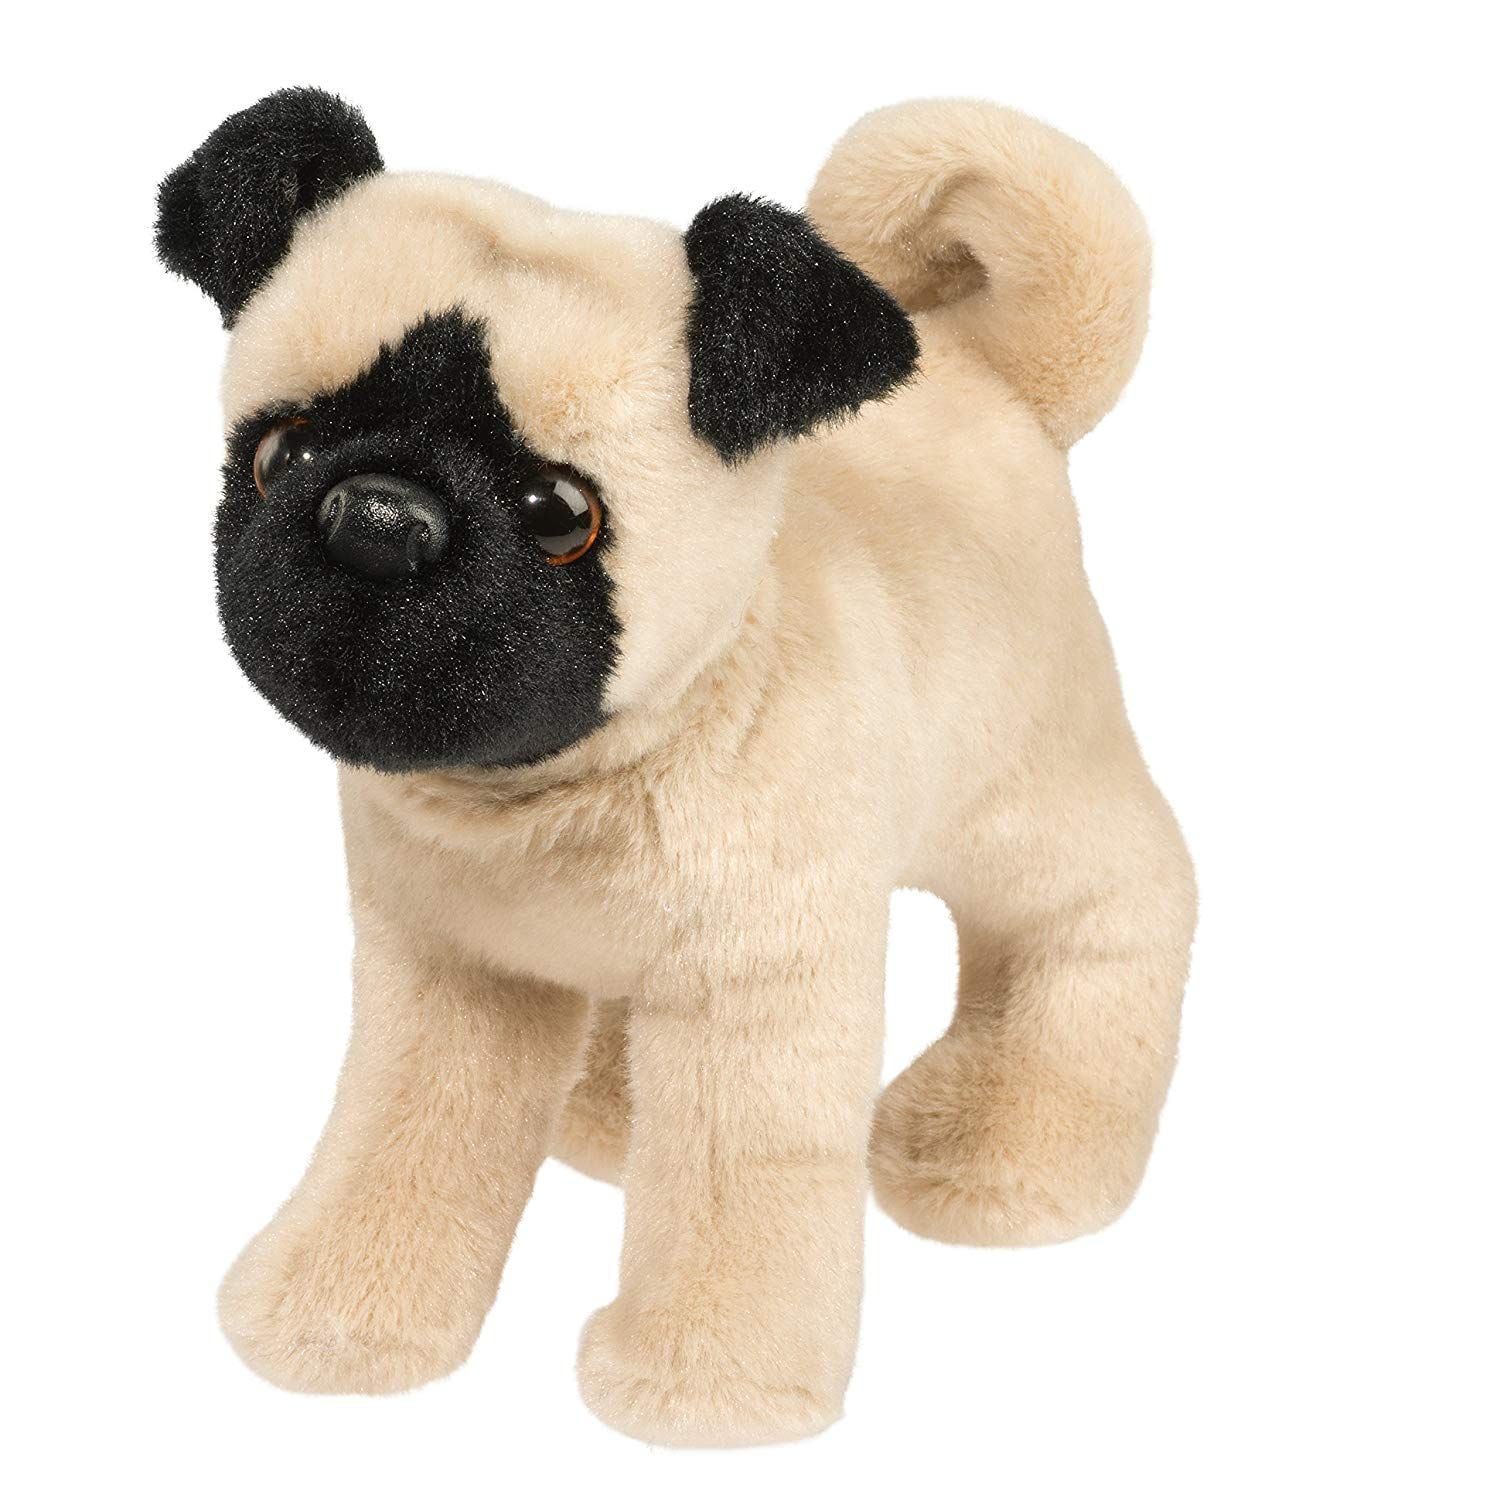 Bardo 9" long Pug plush stuffed animal dog puppy by Douglas Cuddle Toy 